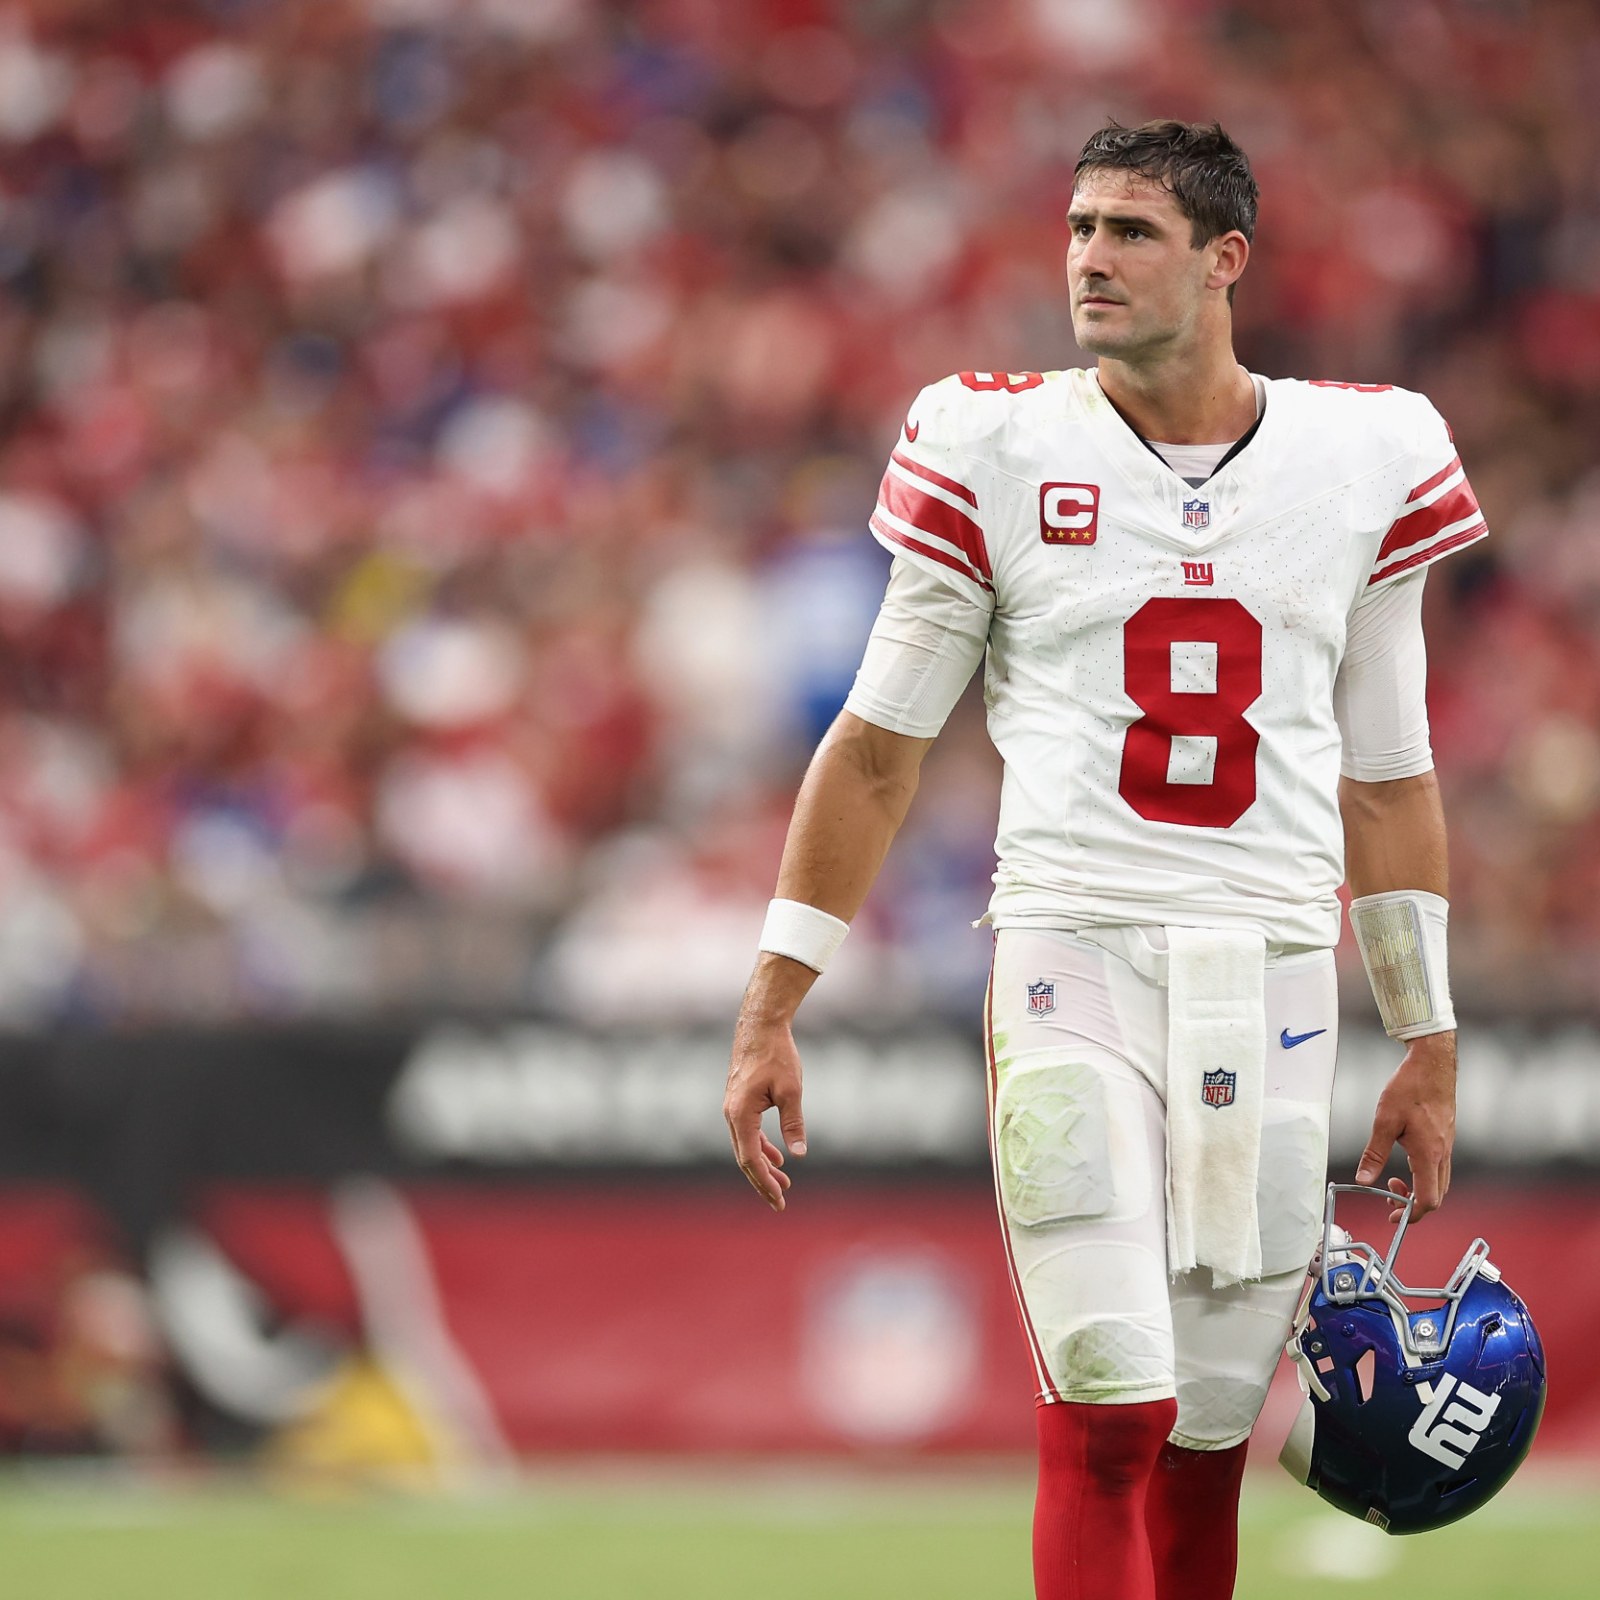 Daniel Jones Neck Injury: What We Know About Giants Quarterback's